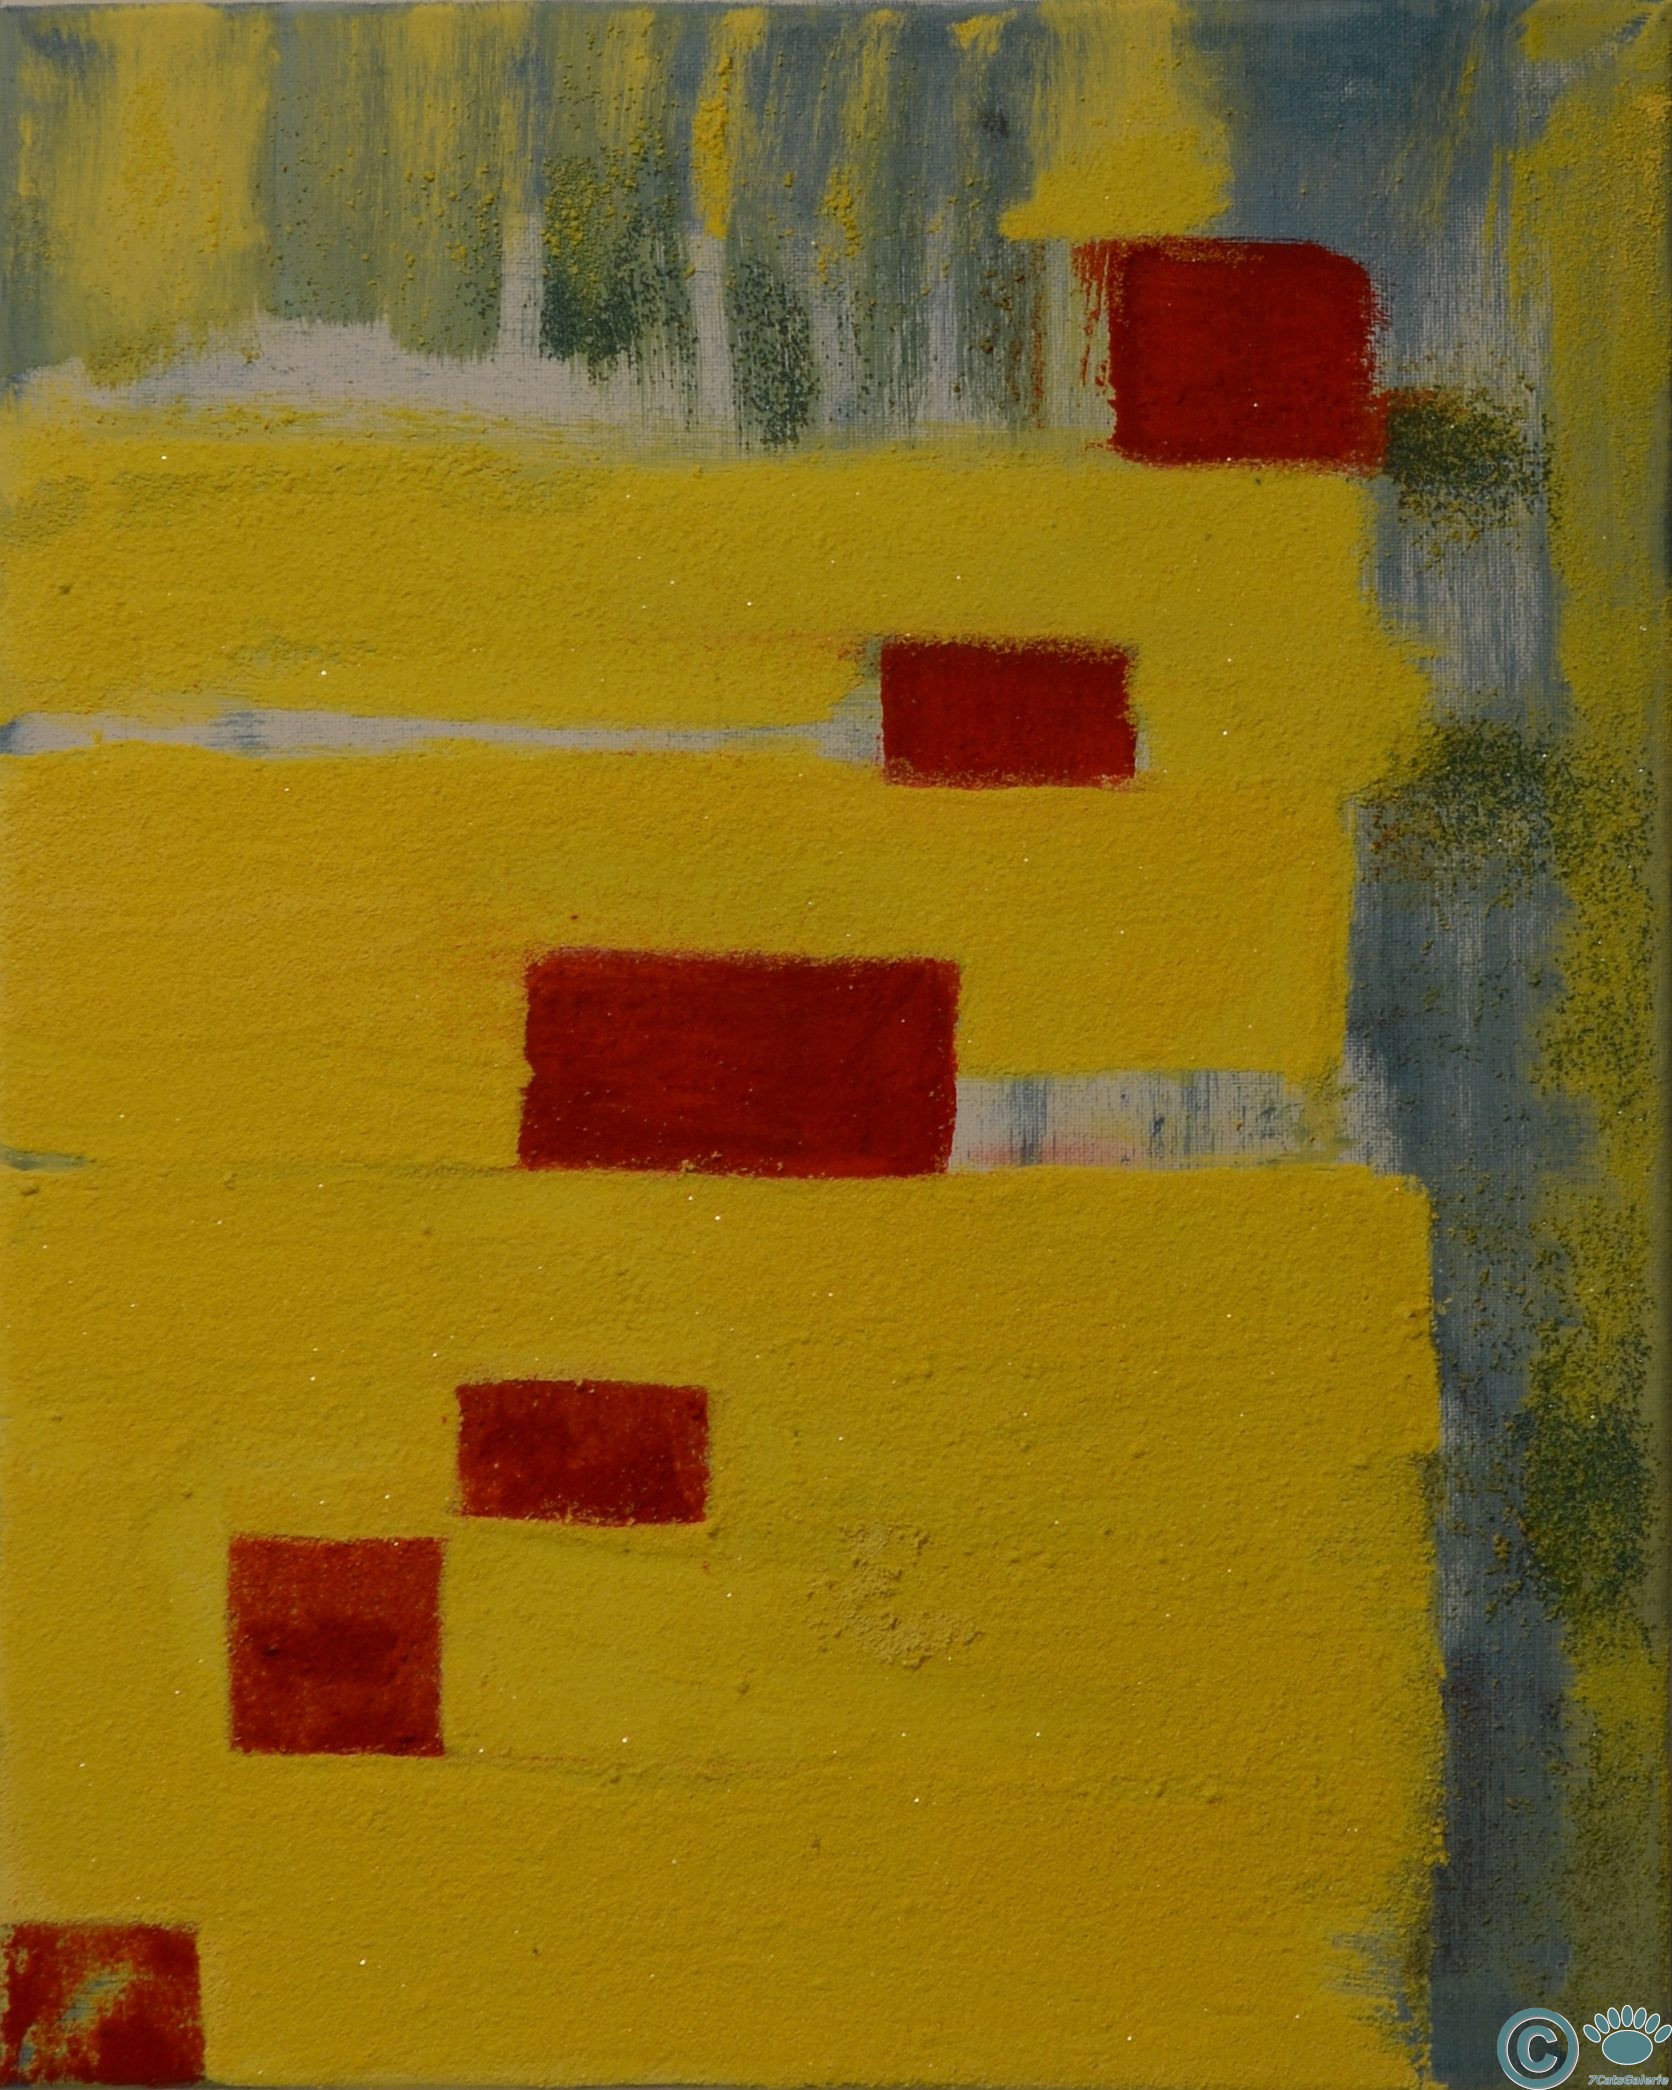 Red Steps (16" x 20")